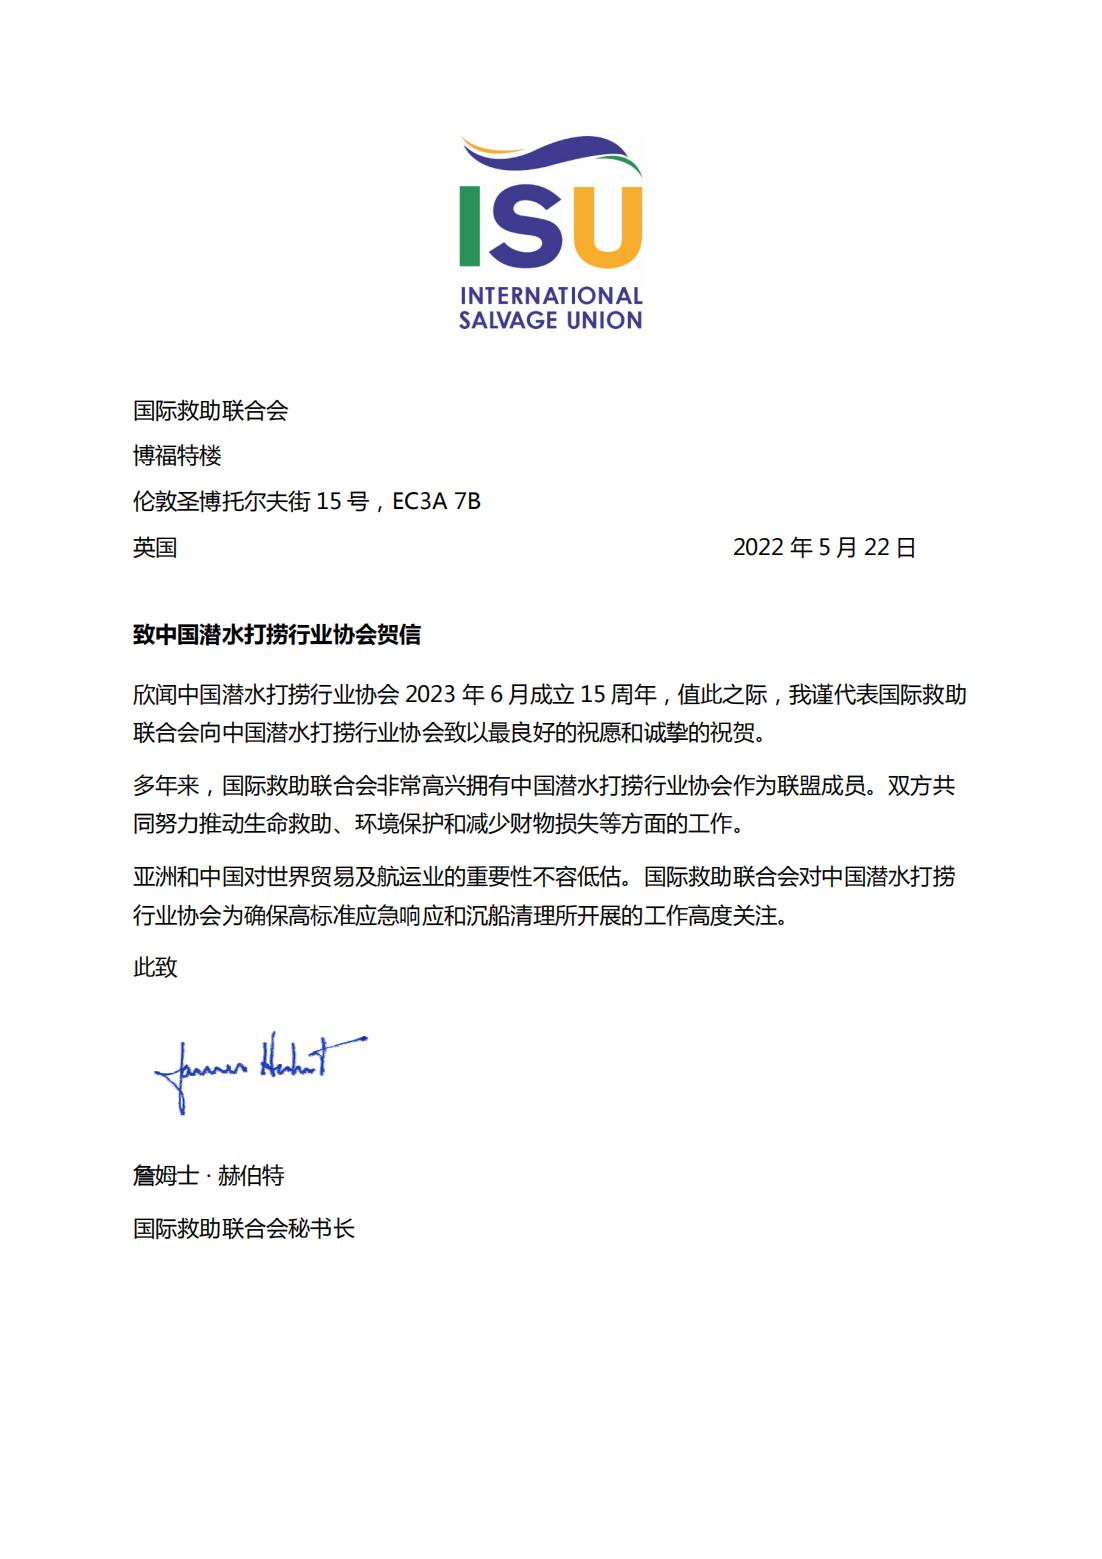 ISU congratulatory letter to CDSA 15th Anniversary - 翻译_00.jpg